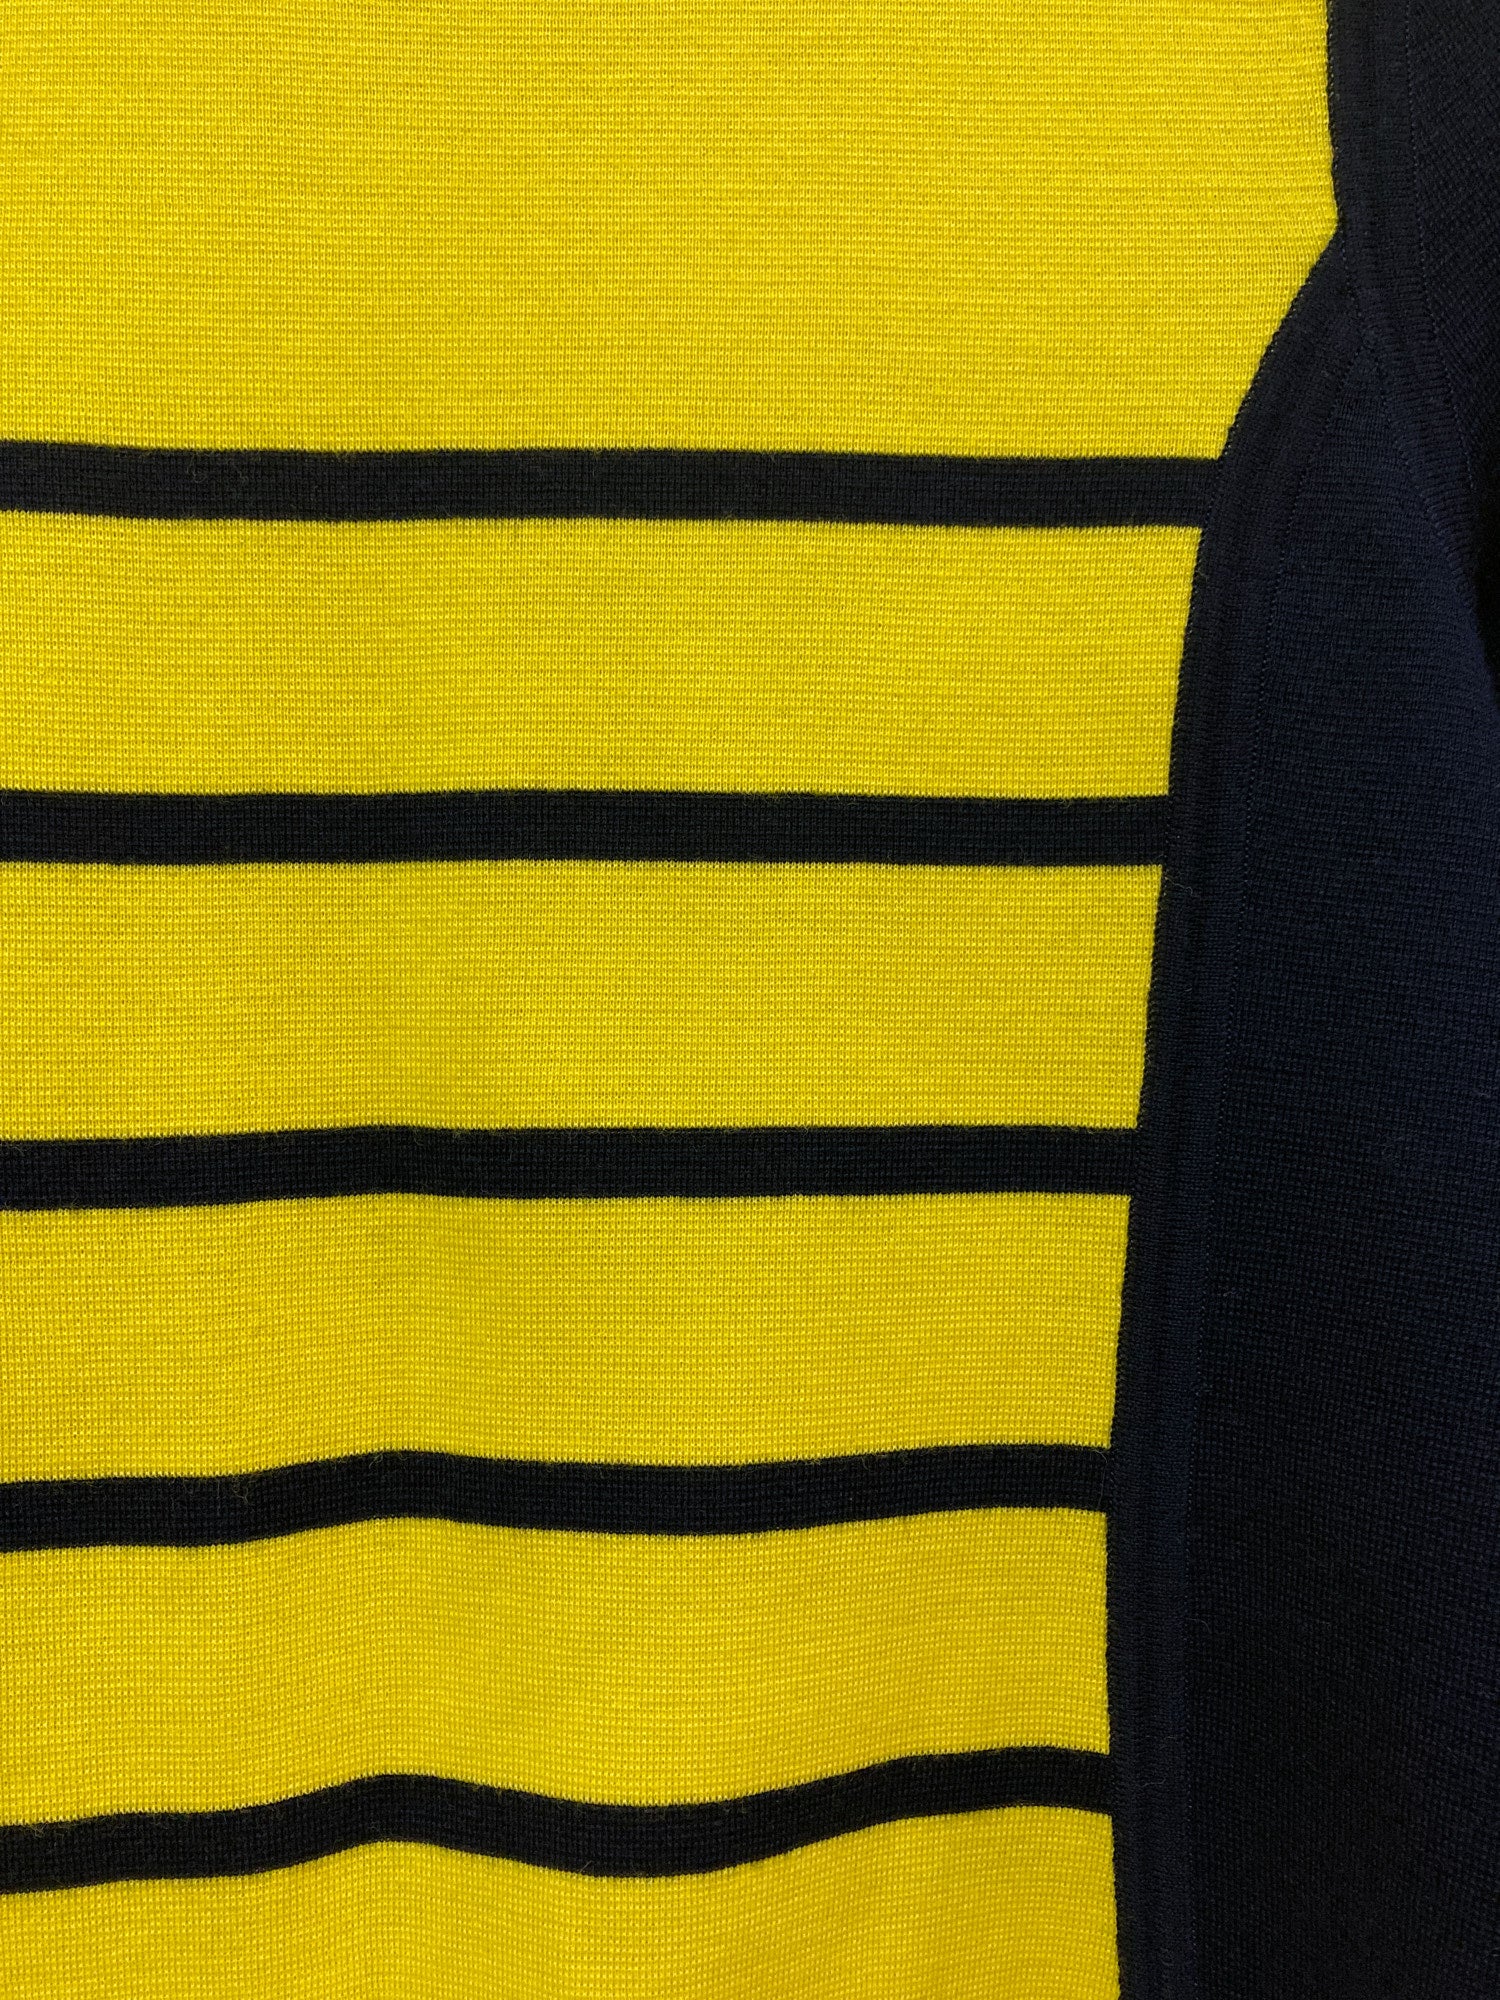 Junko Shimada Part 2 yellow and navy wool stripe mock neck sweater - M S